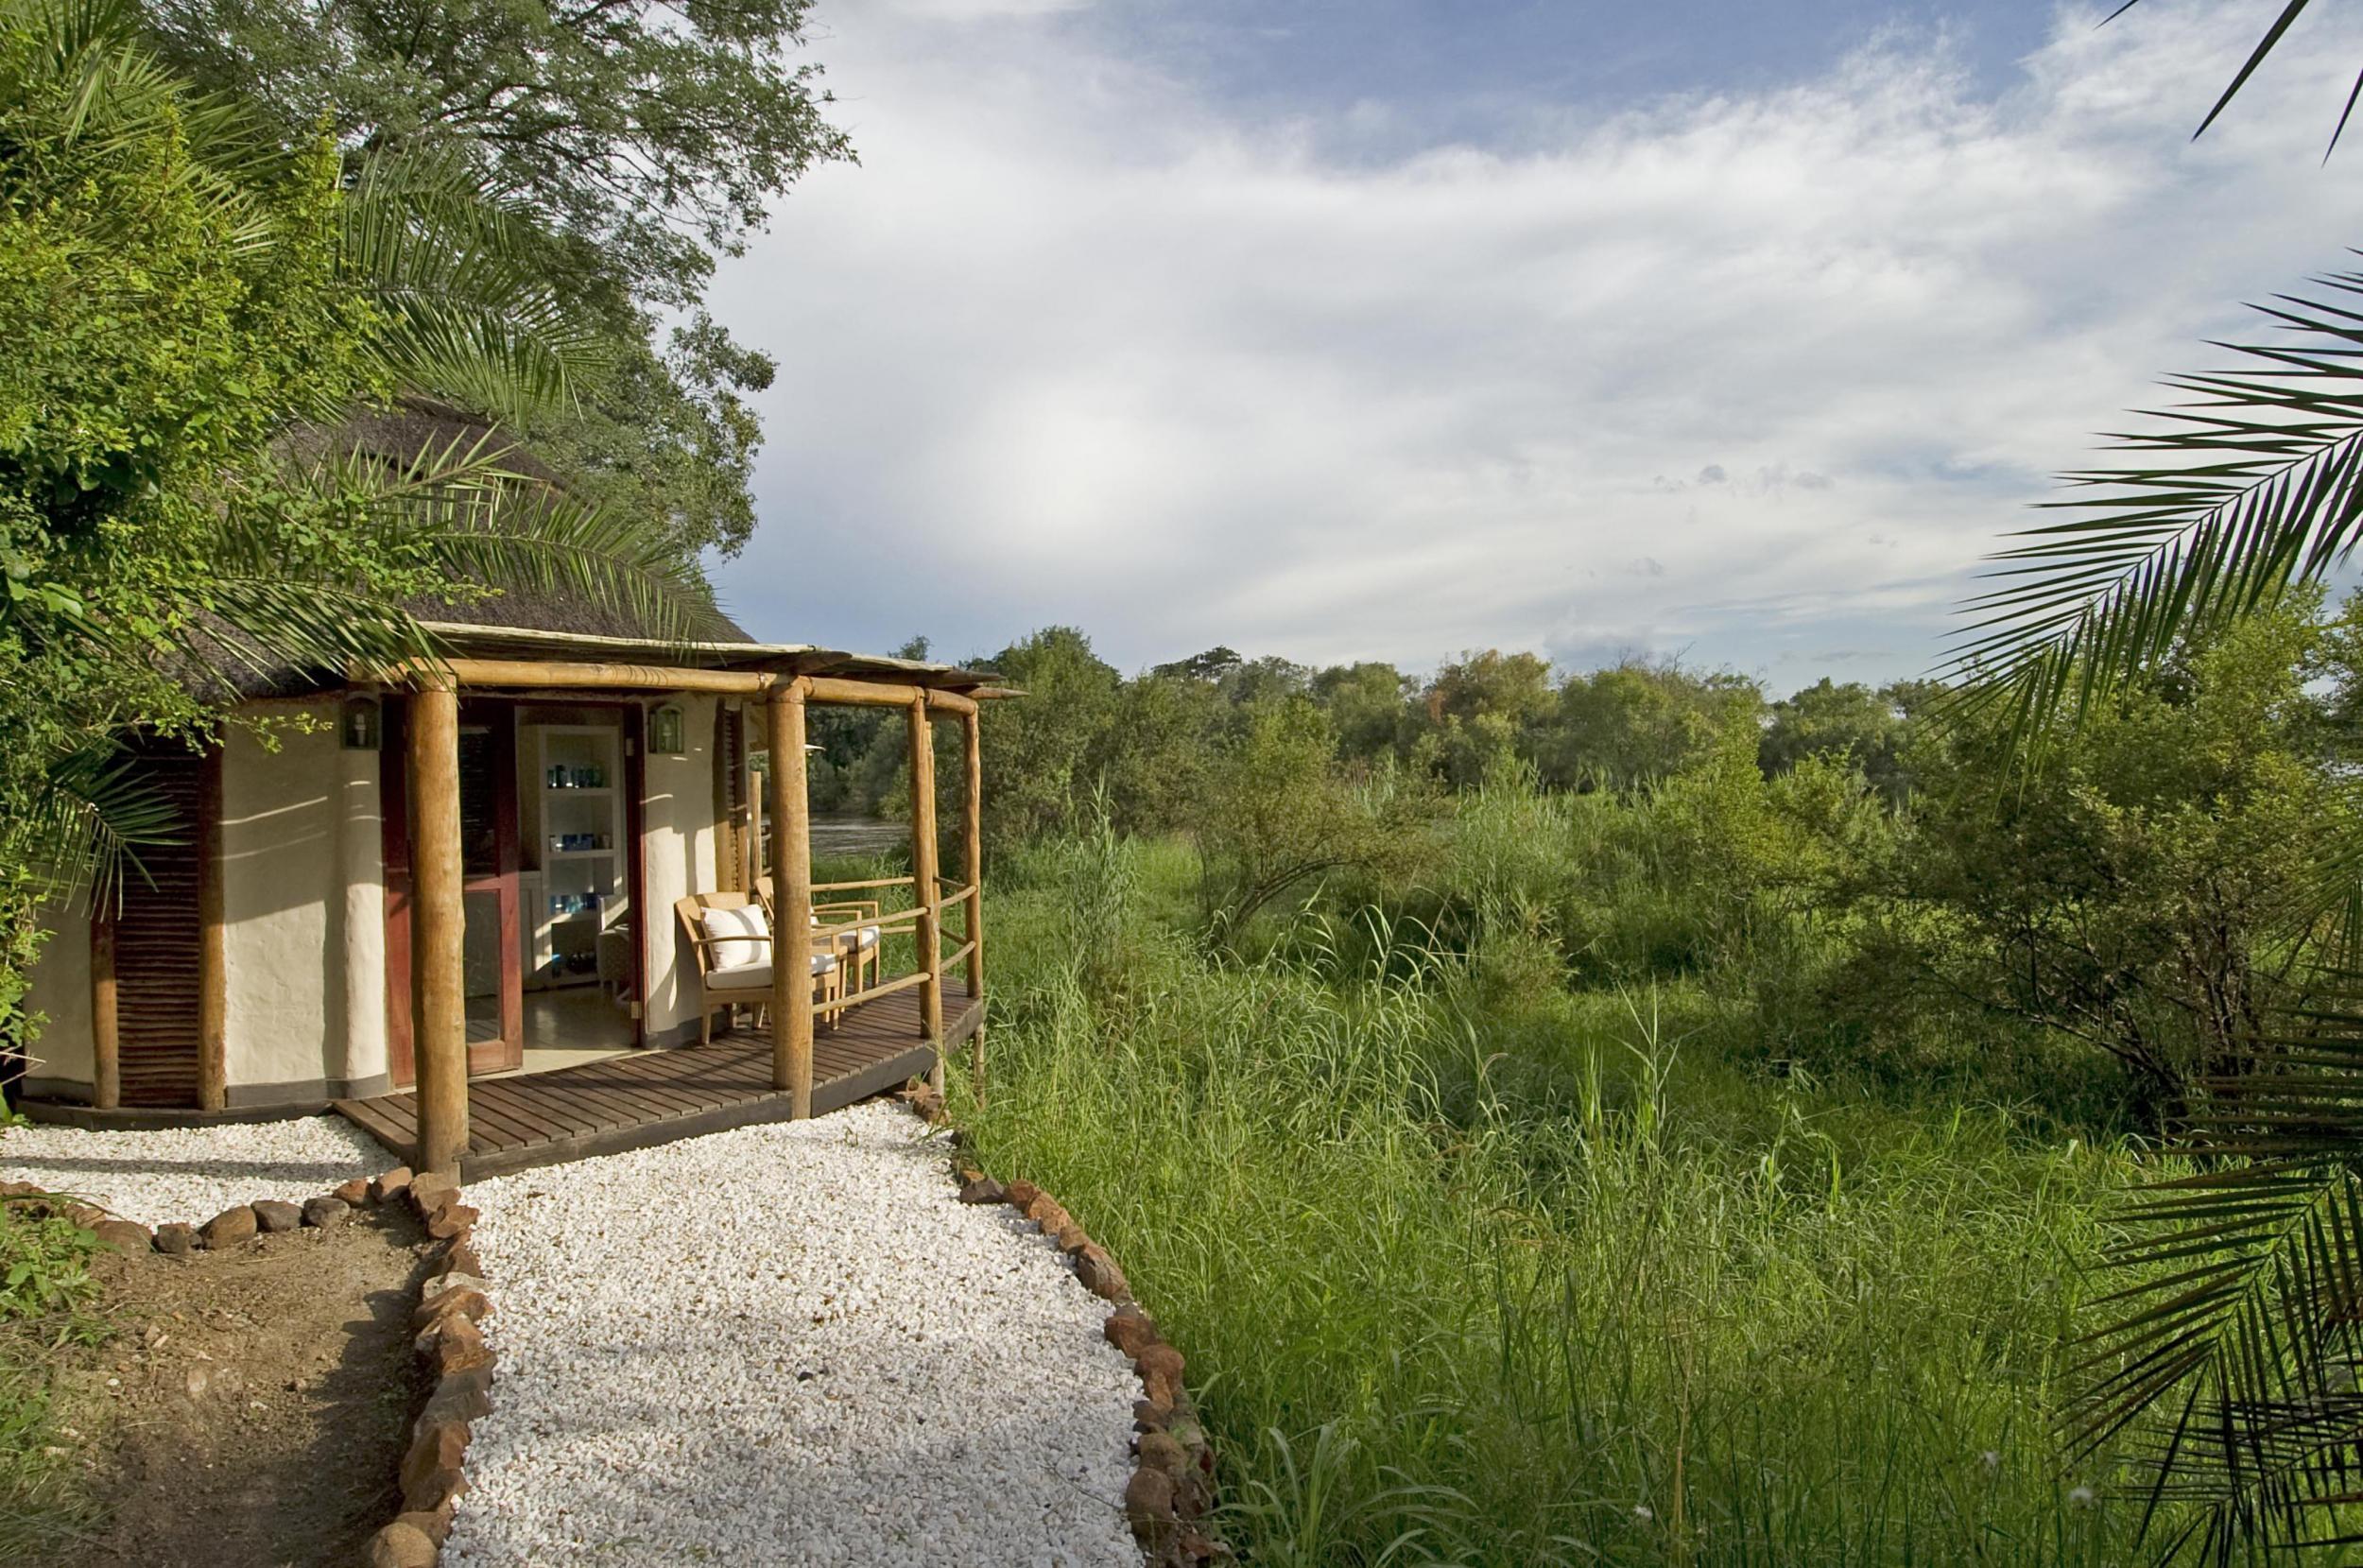 The lodge sits within the lush Mosi-oa-Tunya National Park